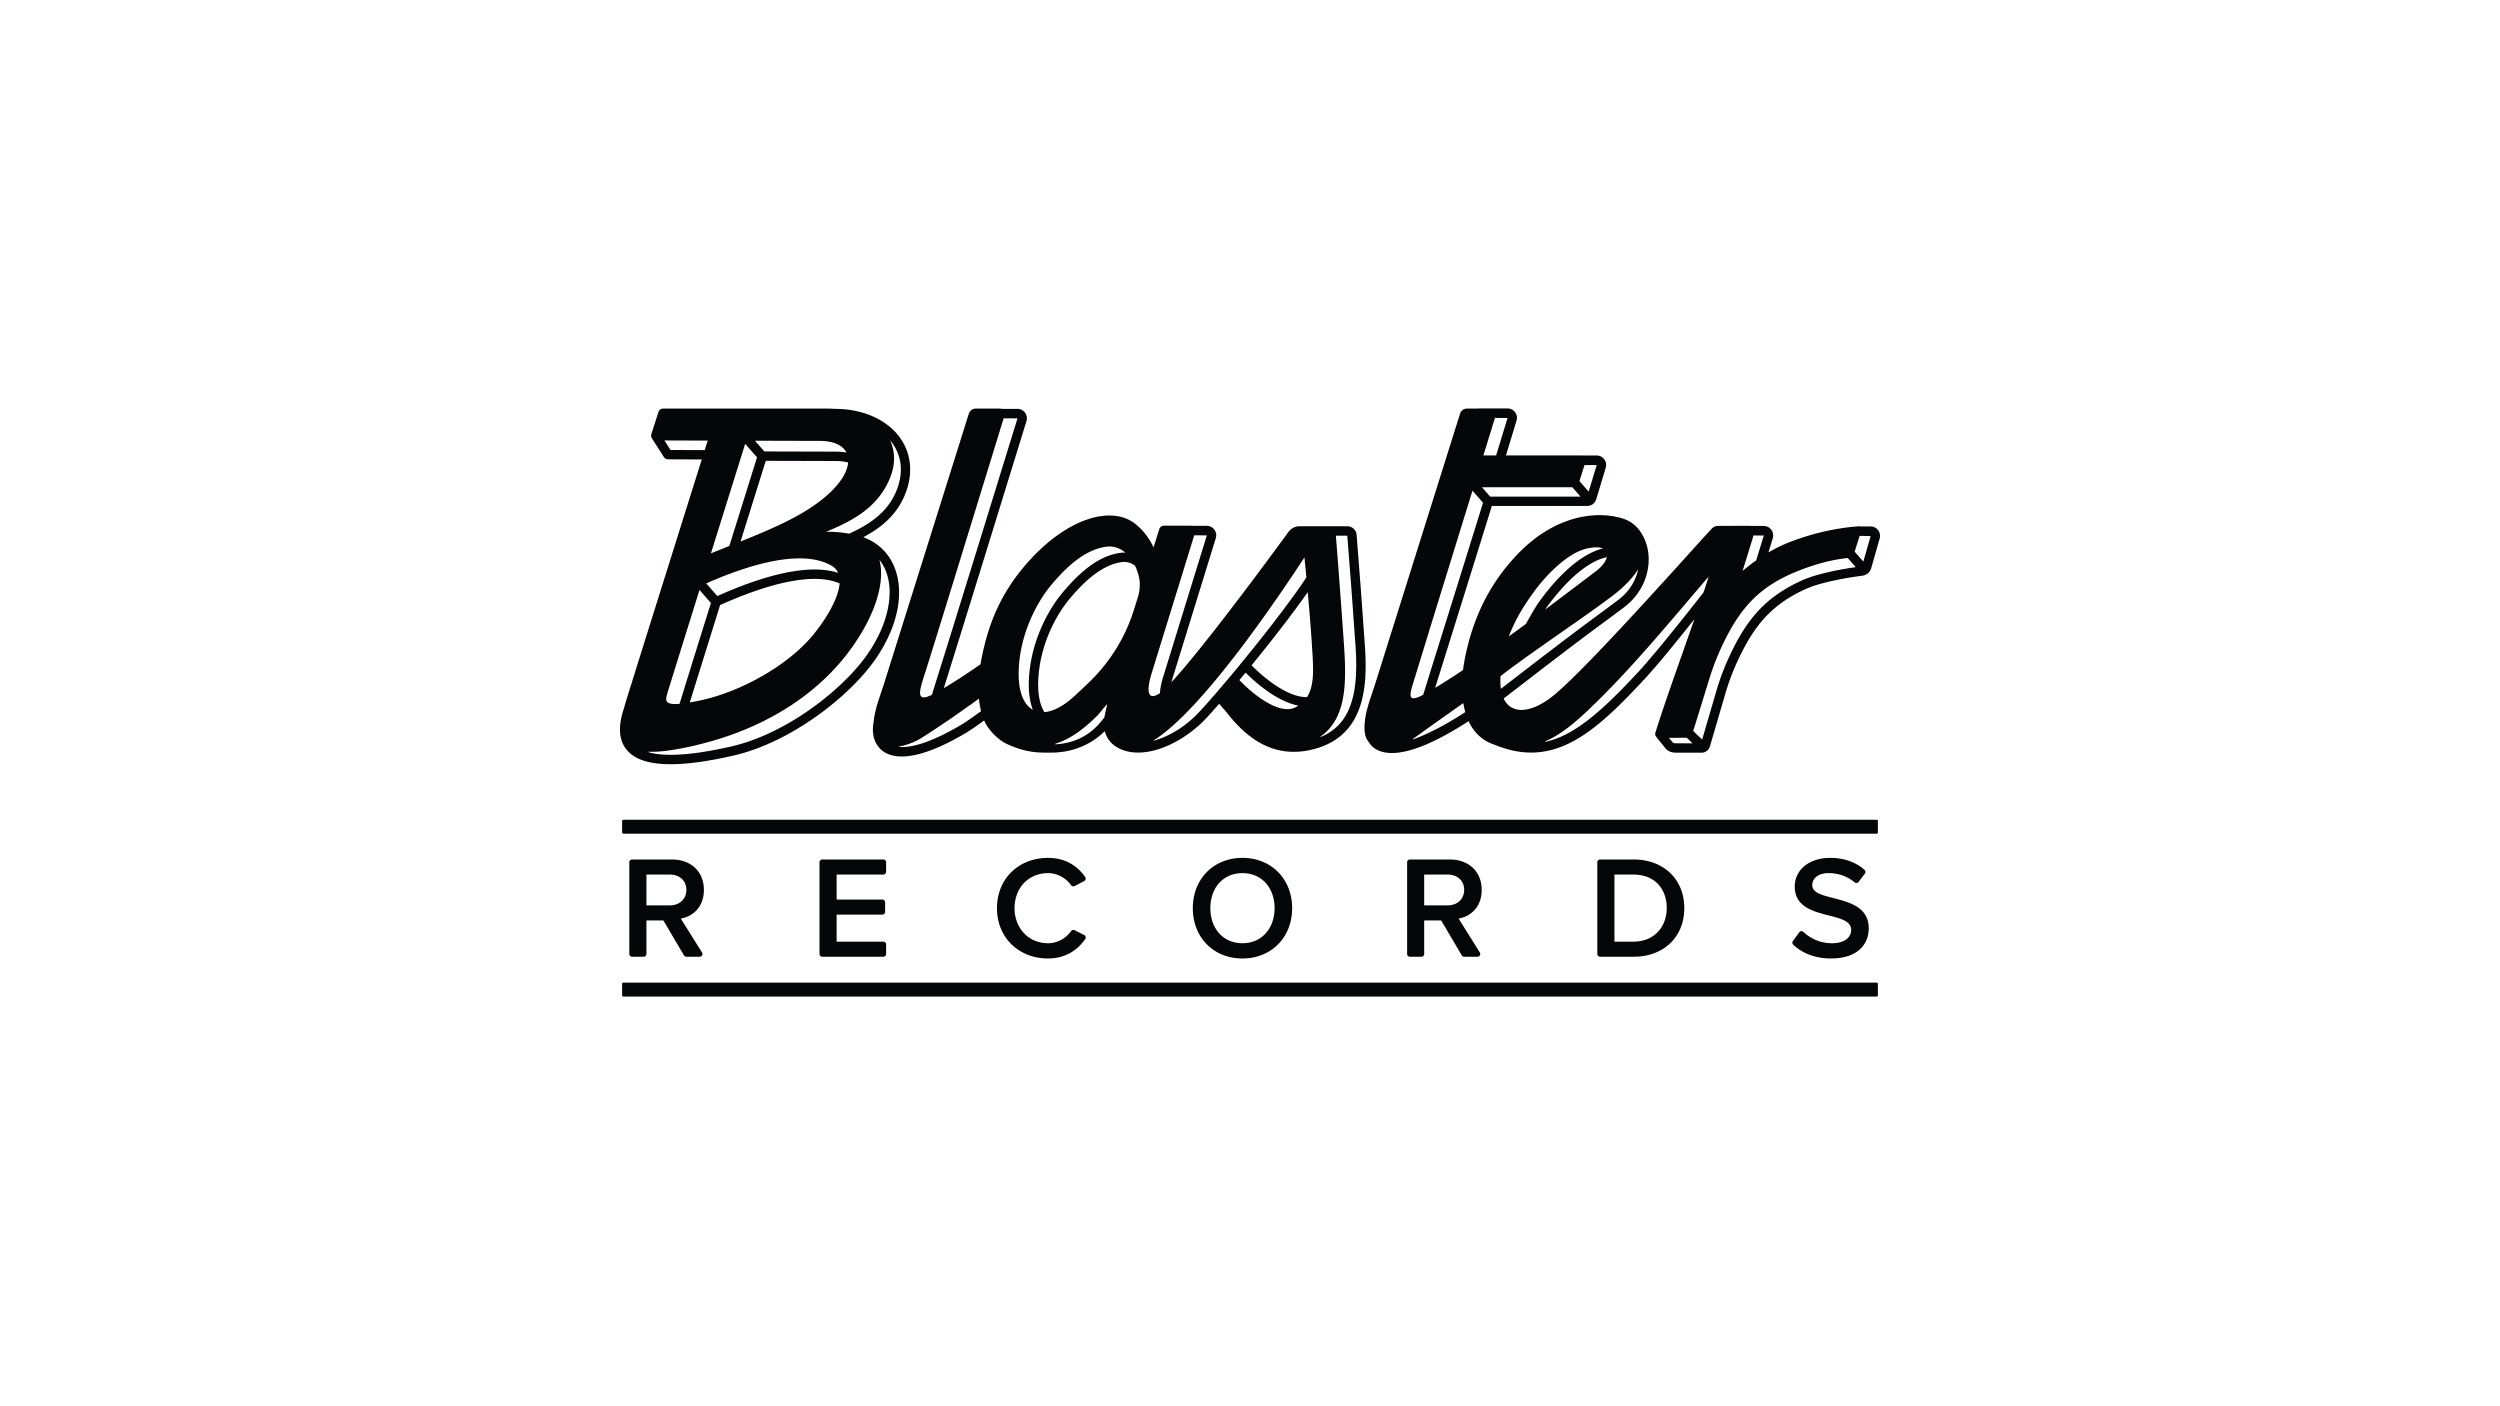 Branding and wordmark for the Nashville record label Blaster.